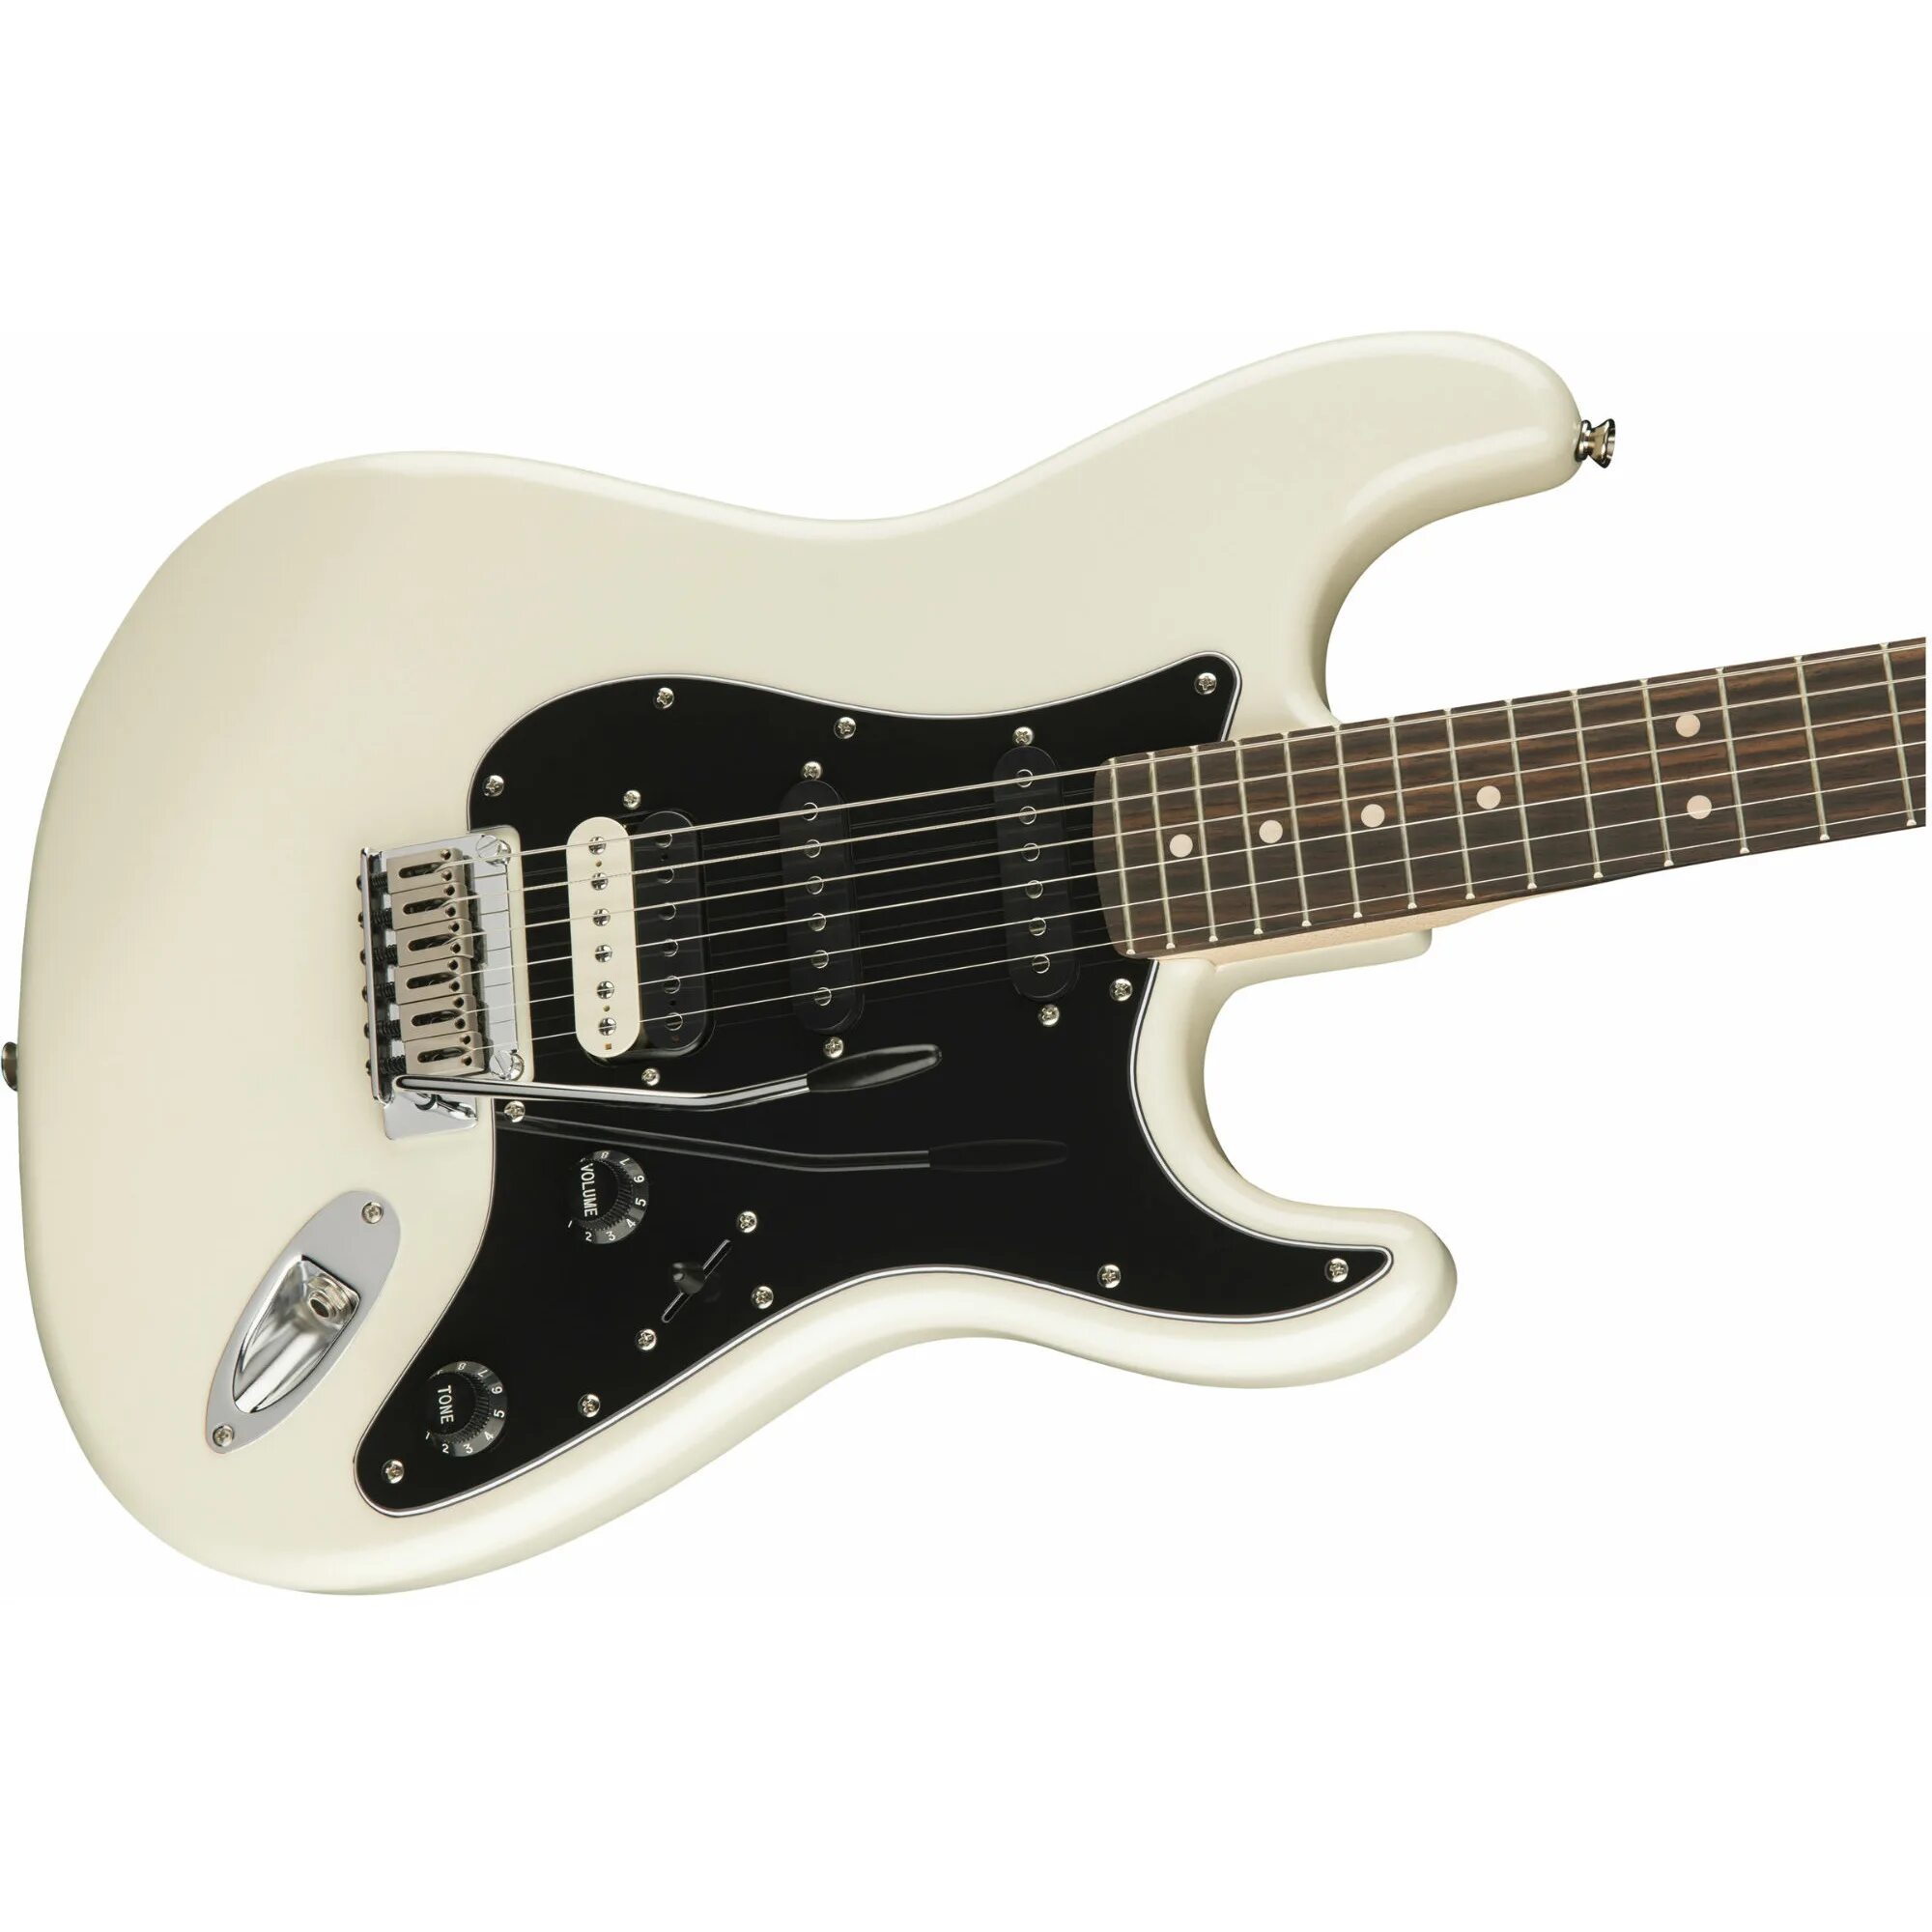 Fender стратокастер White Pearl. Гитара Fender Squier Stratocaster Affinity. Электрогитара Fender Squier Stratocaster. Электрогитара Фендер Squier Contemporary.